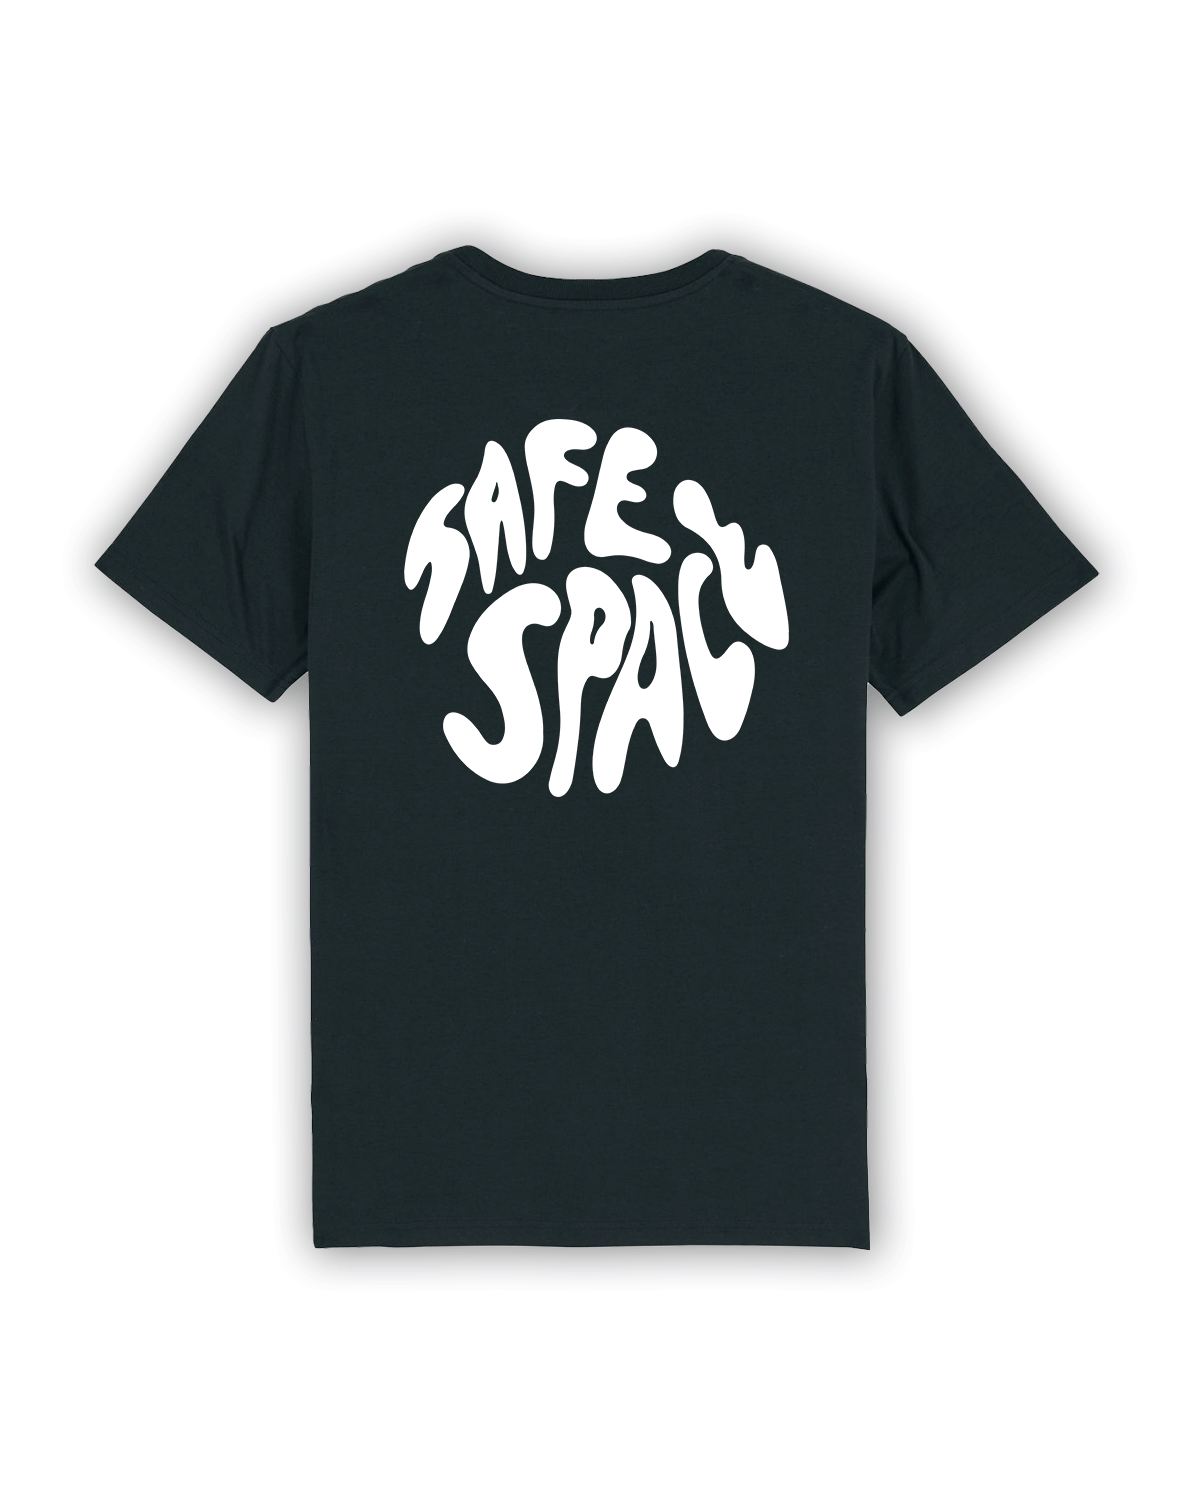 T-Shirt "Mission SafeSpace" schwarz